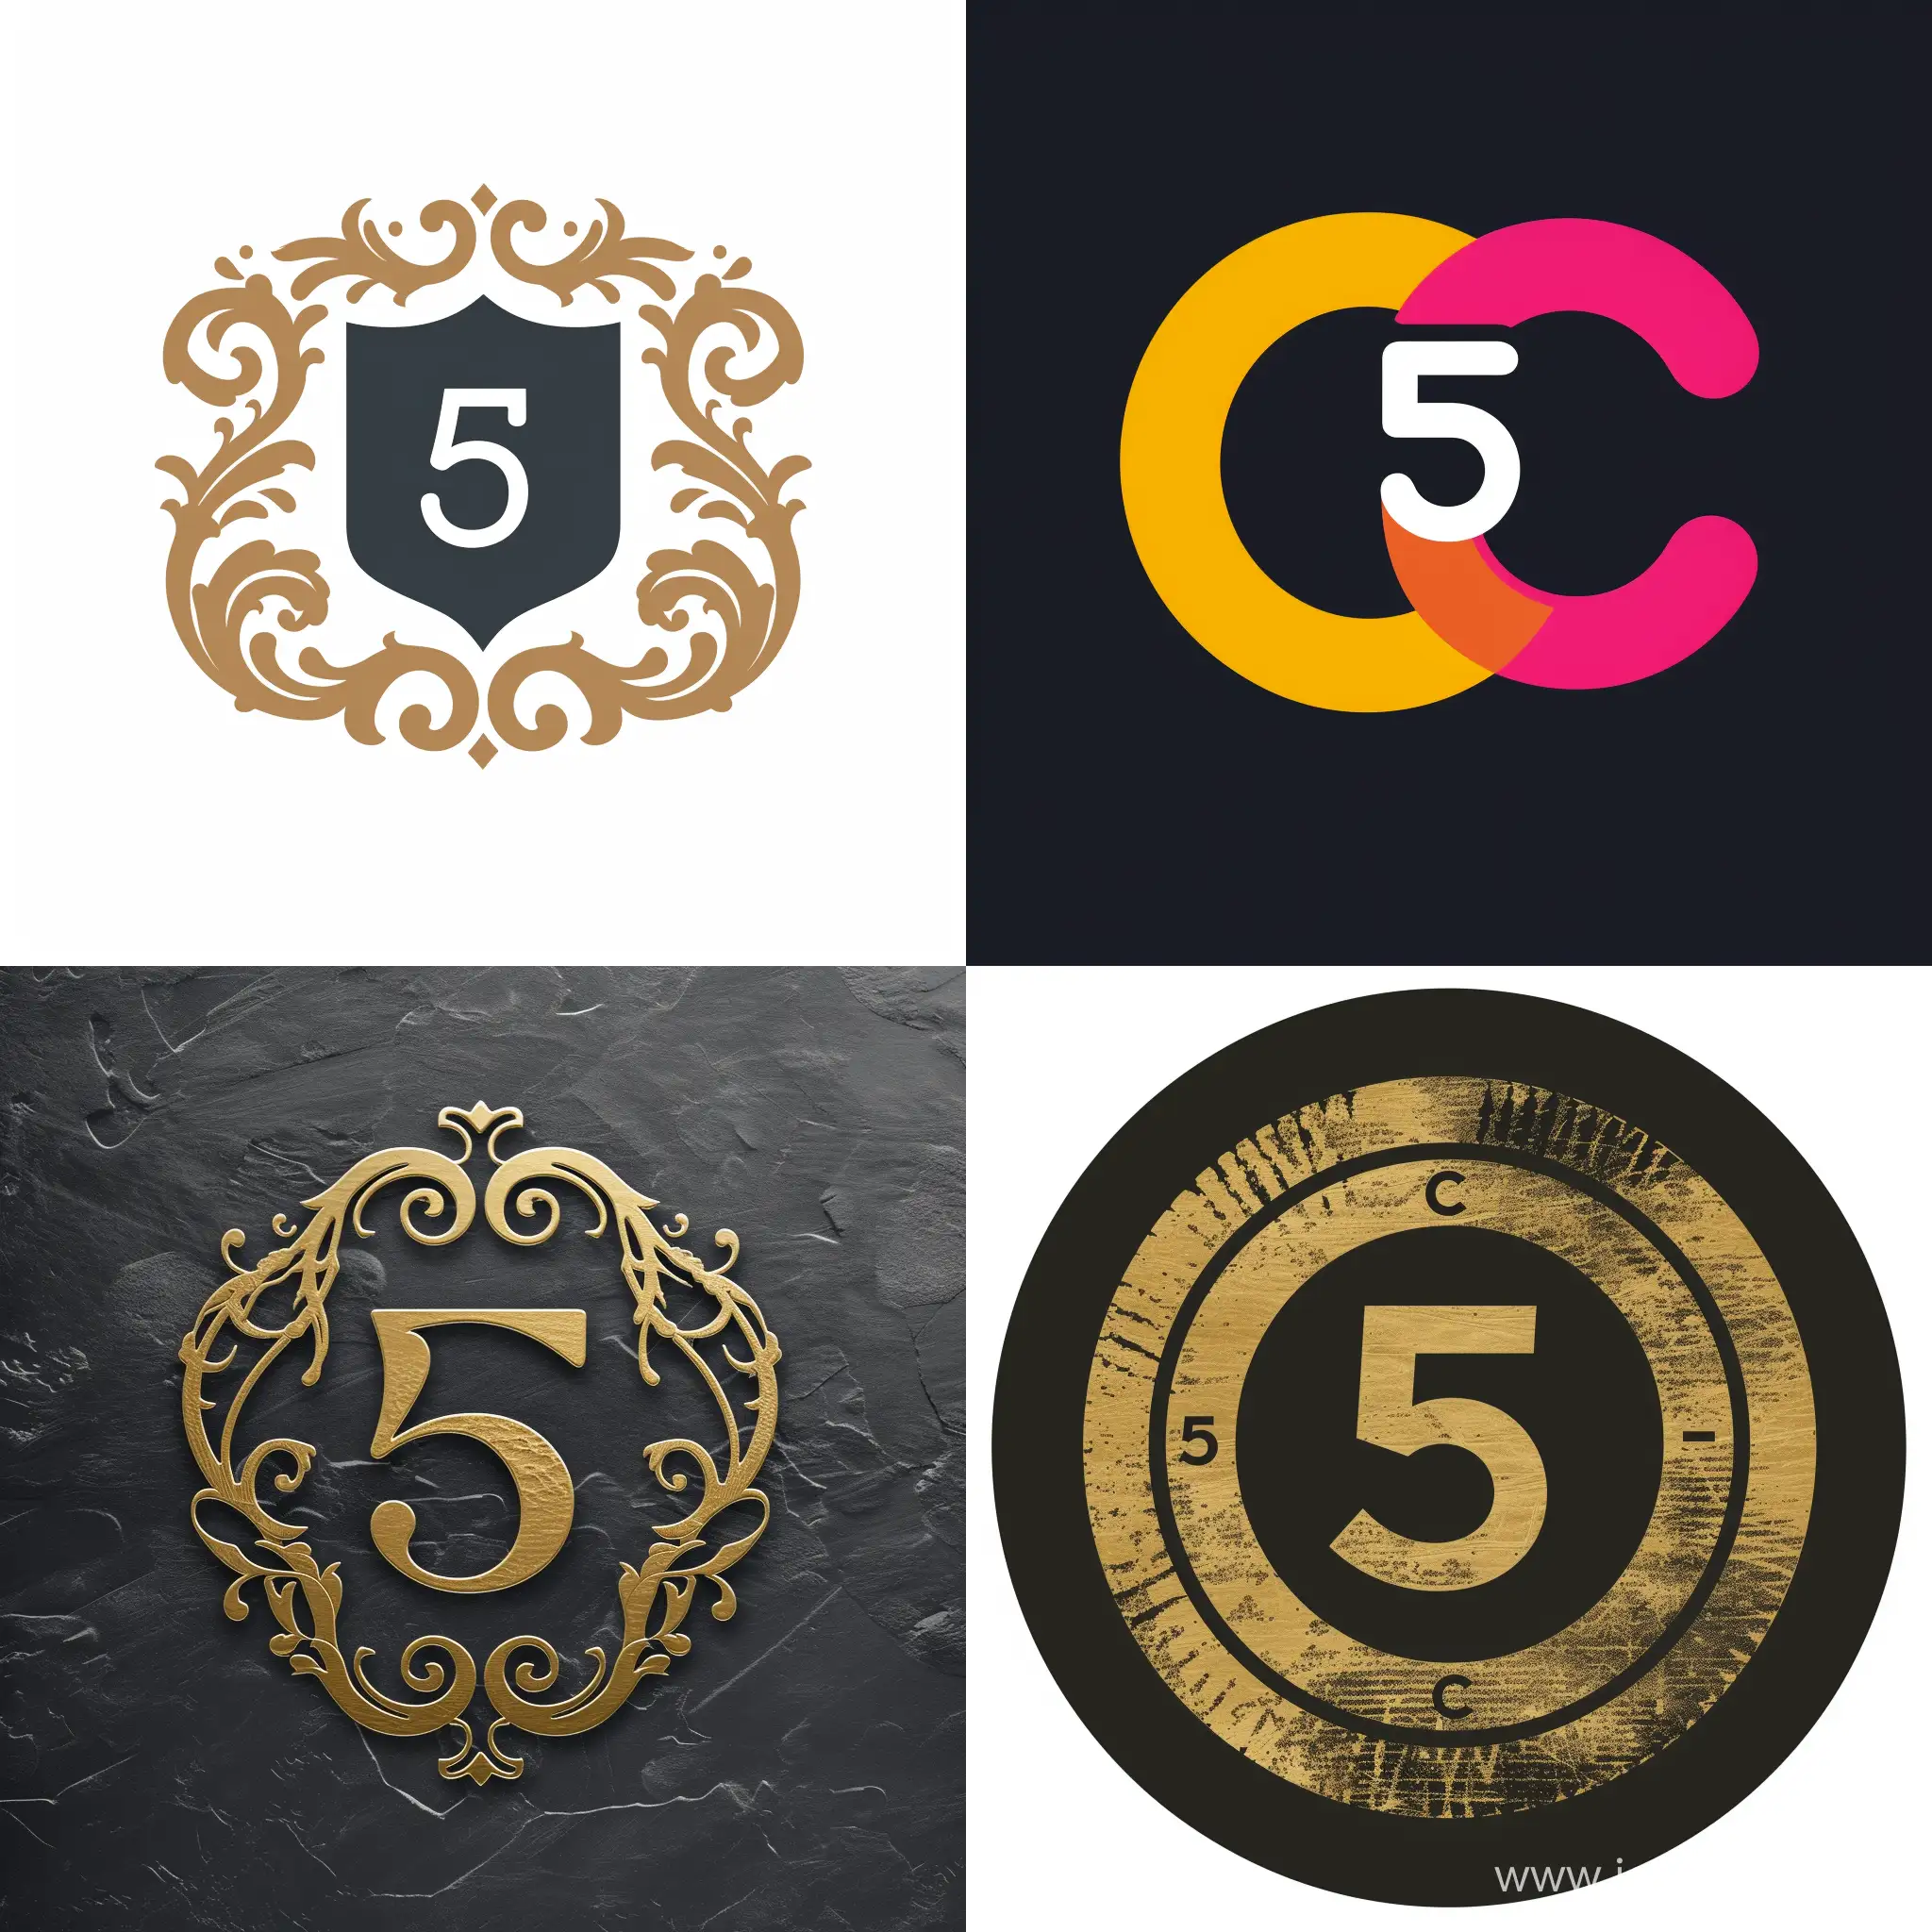 5C-Performing-Arts-Logo-Vibrant-Design-with-Central-5C-Emblem